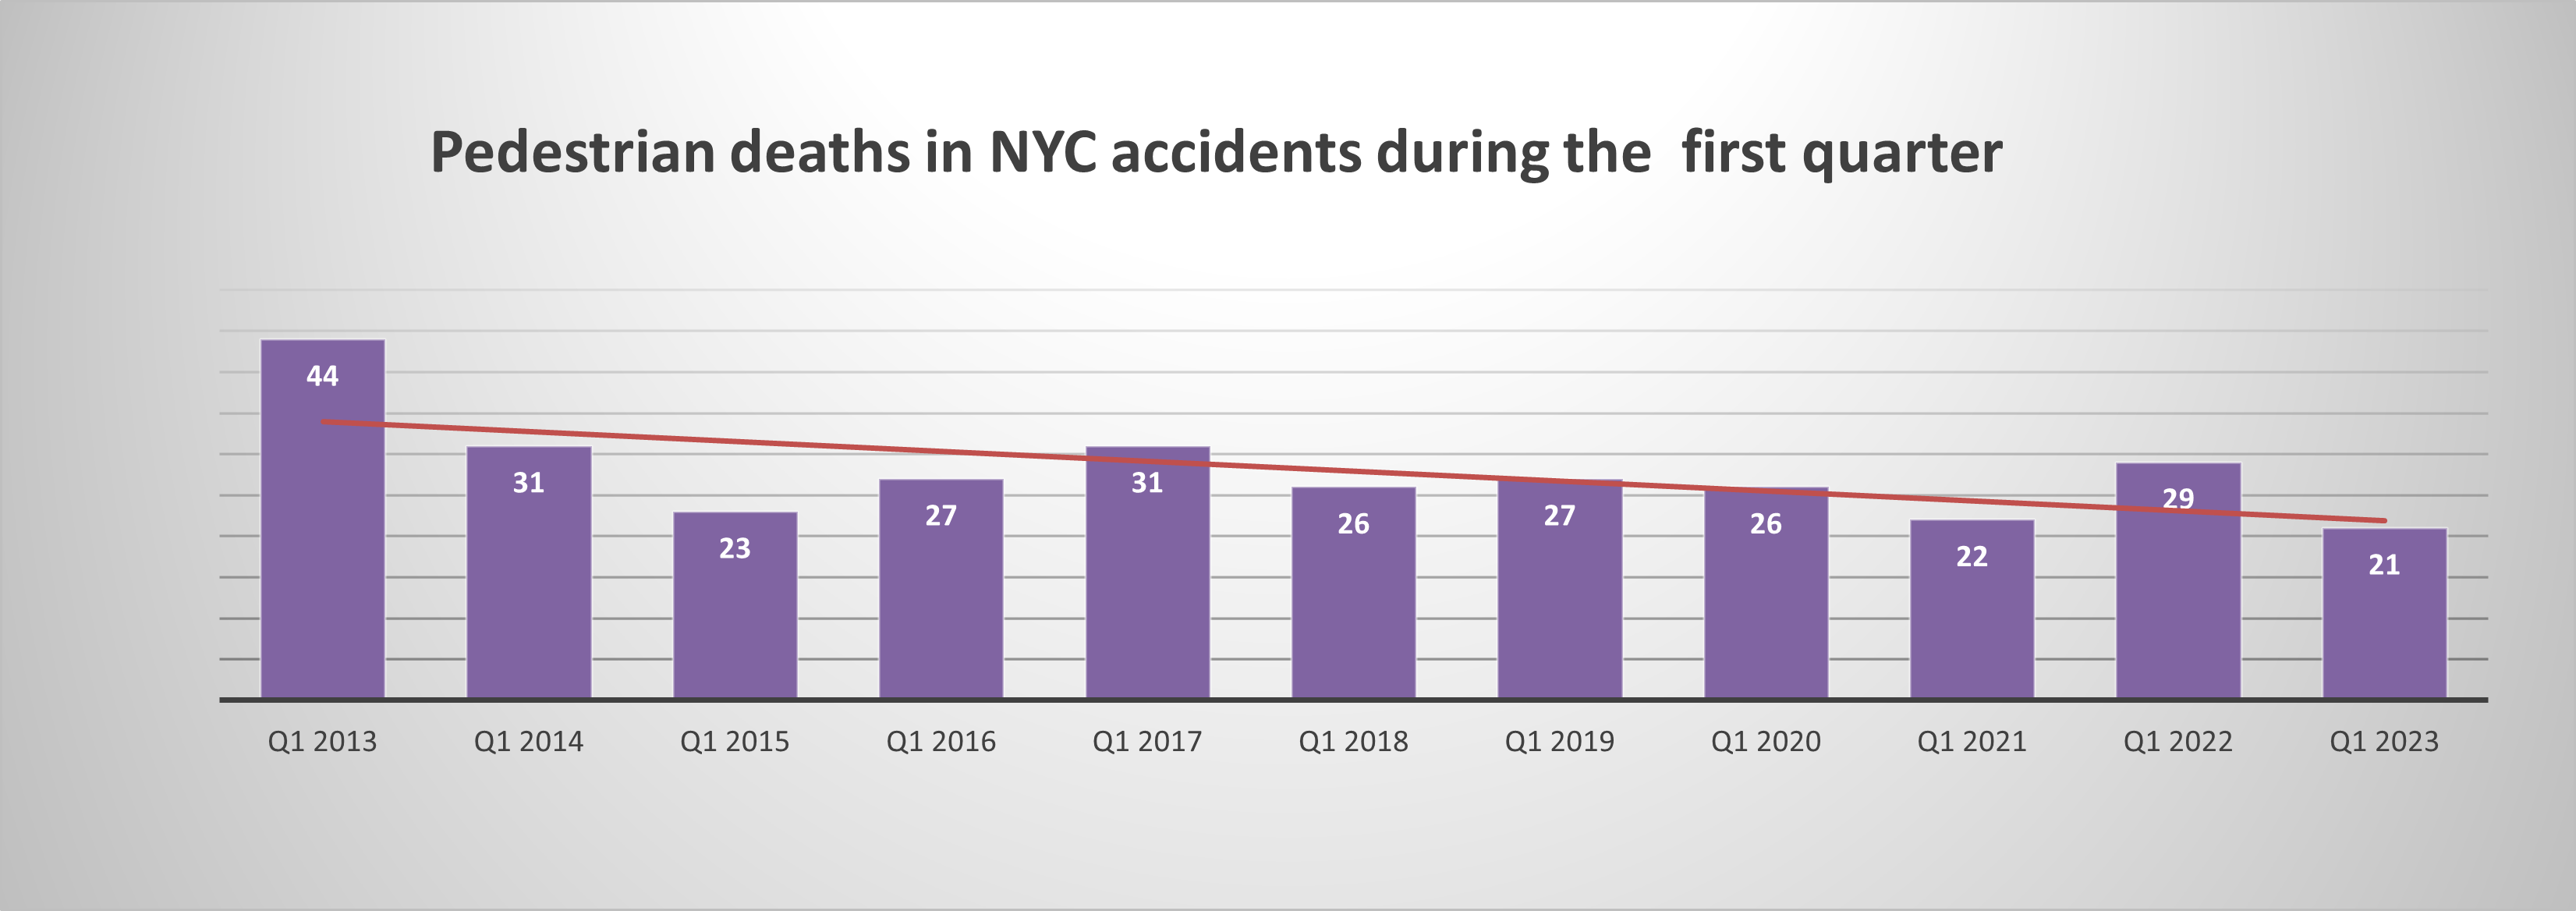 pedestrian fatalities NYC Q1 2023